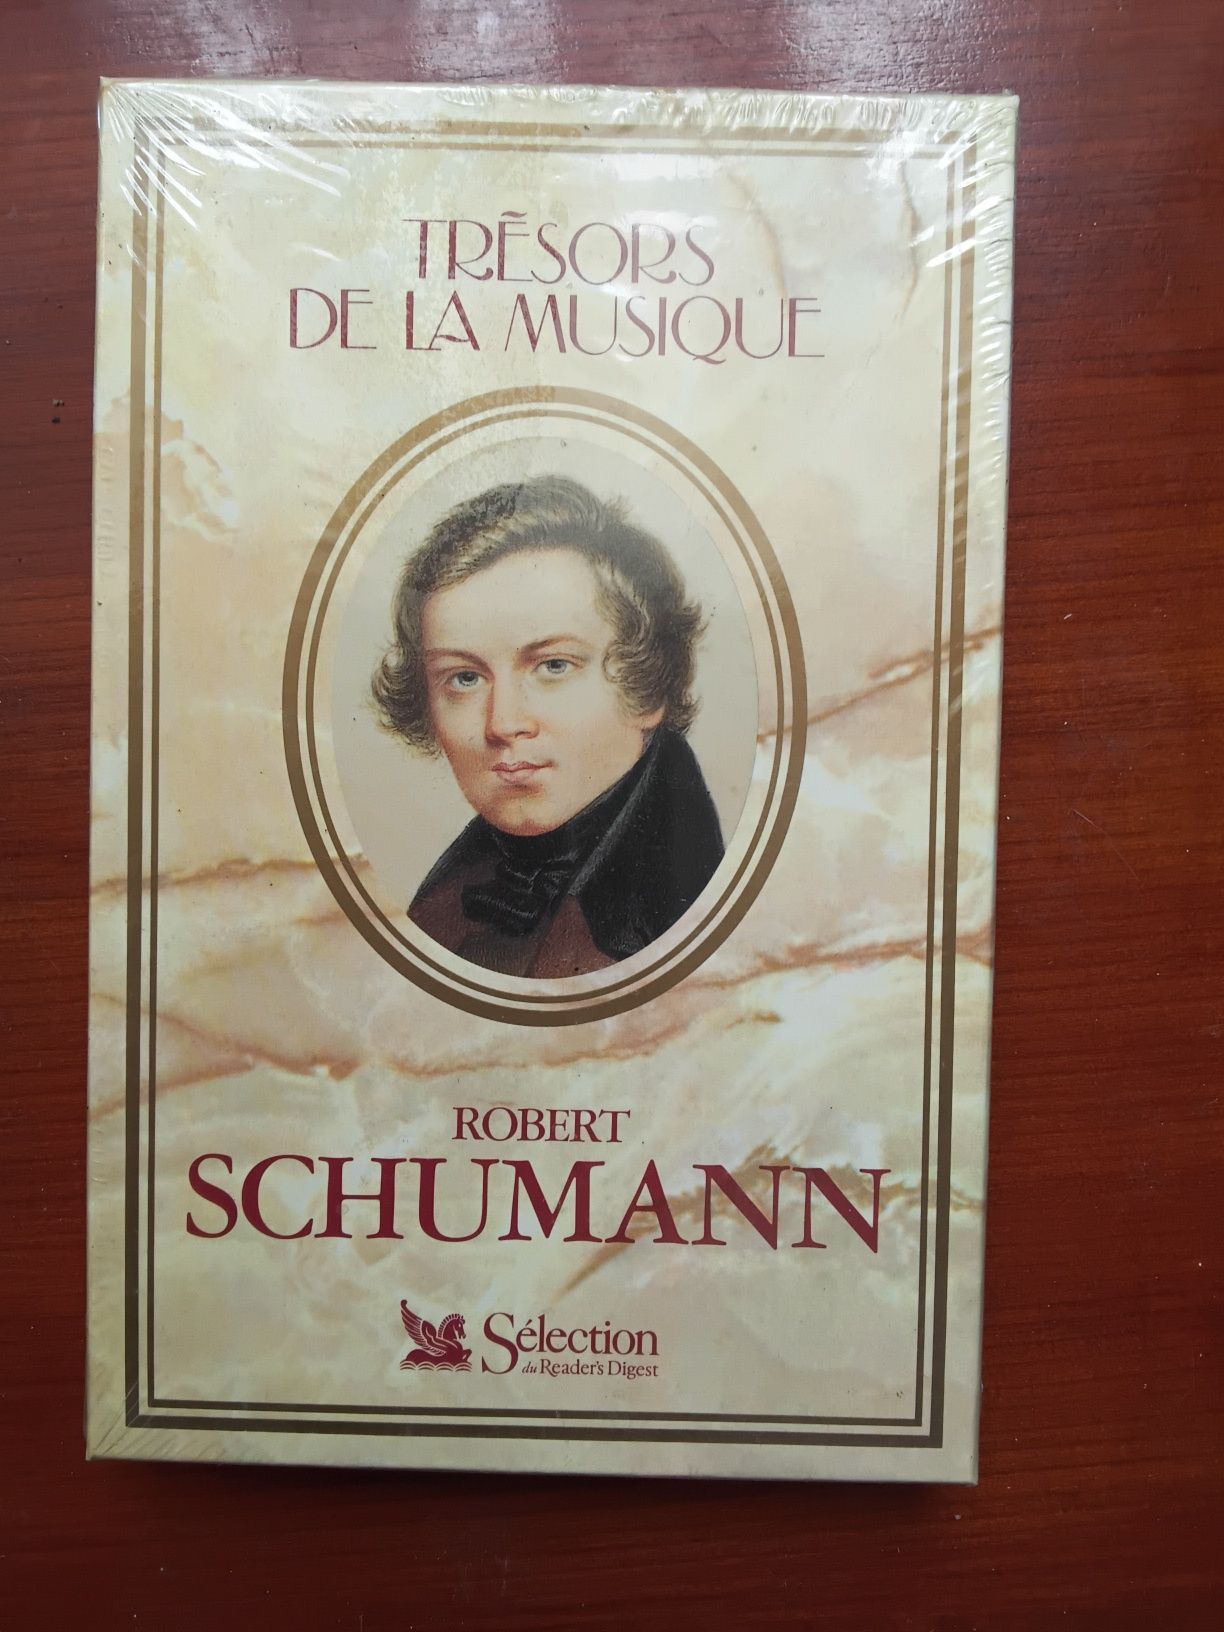 Vand 4 casete audio musica clasica Robert Schumann